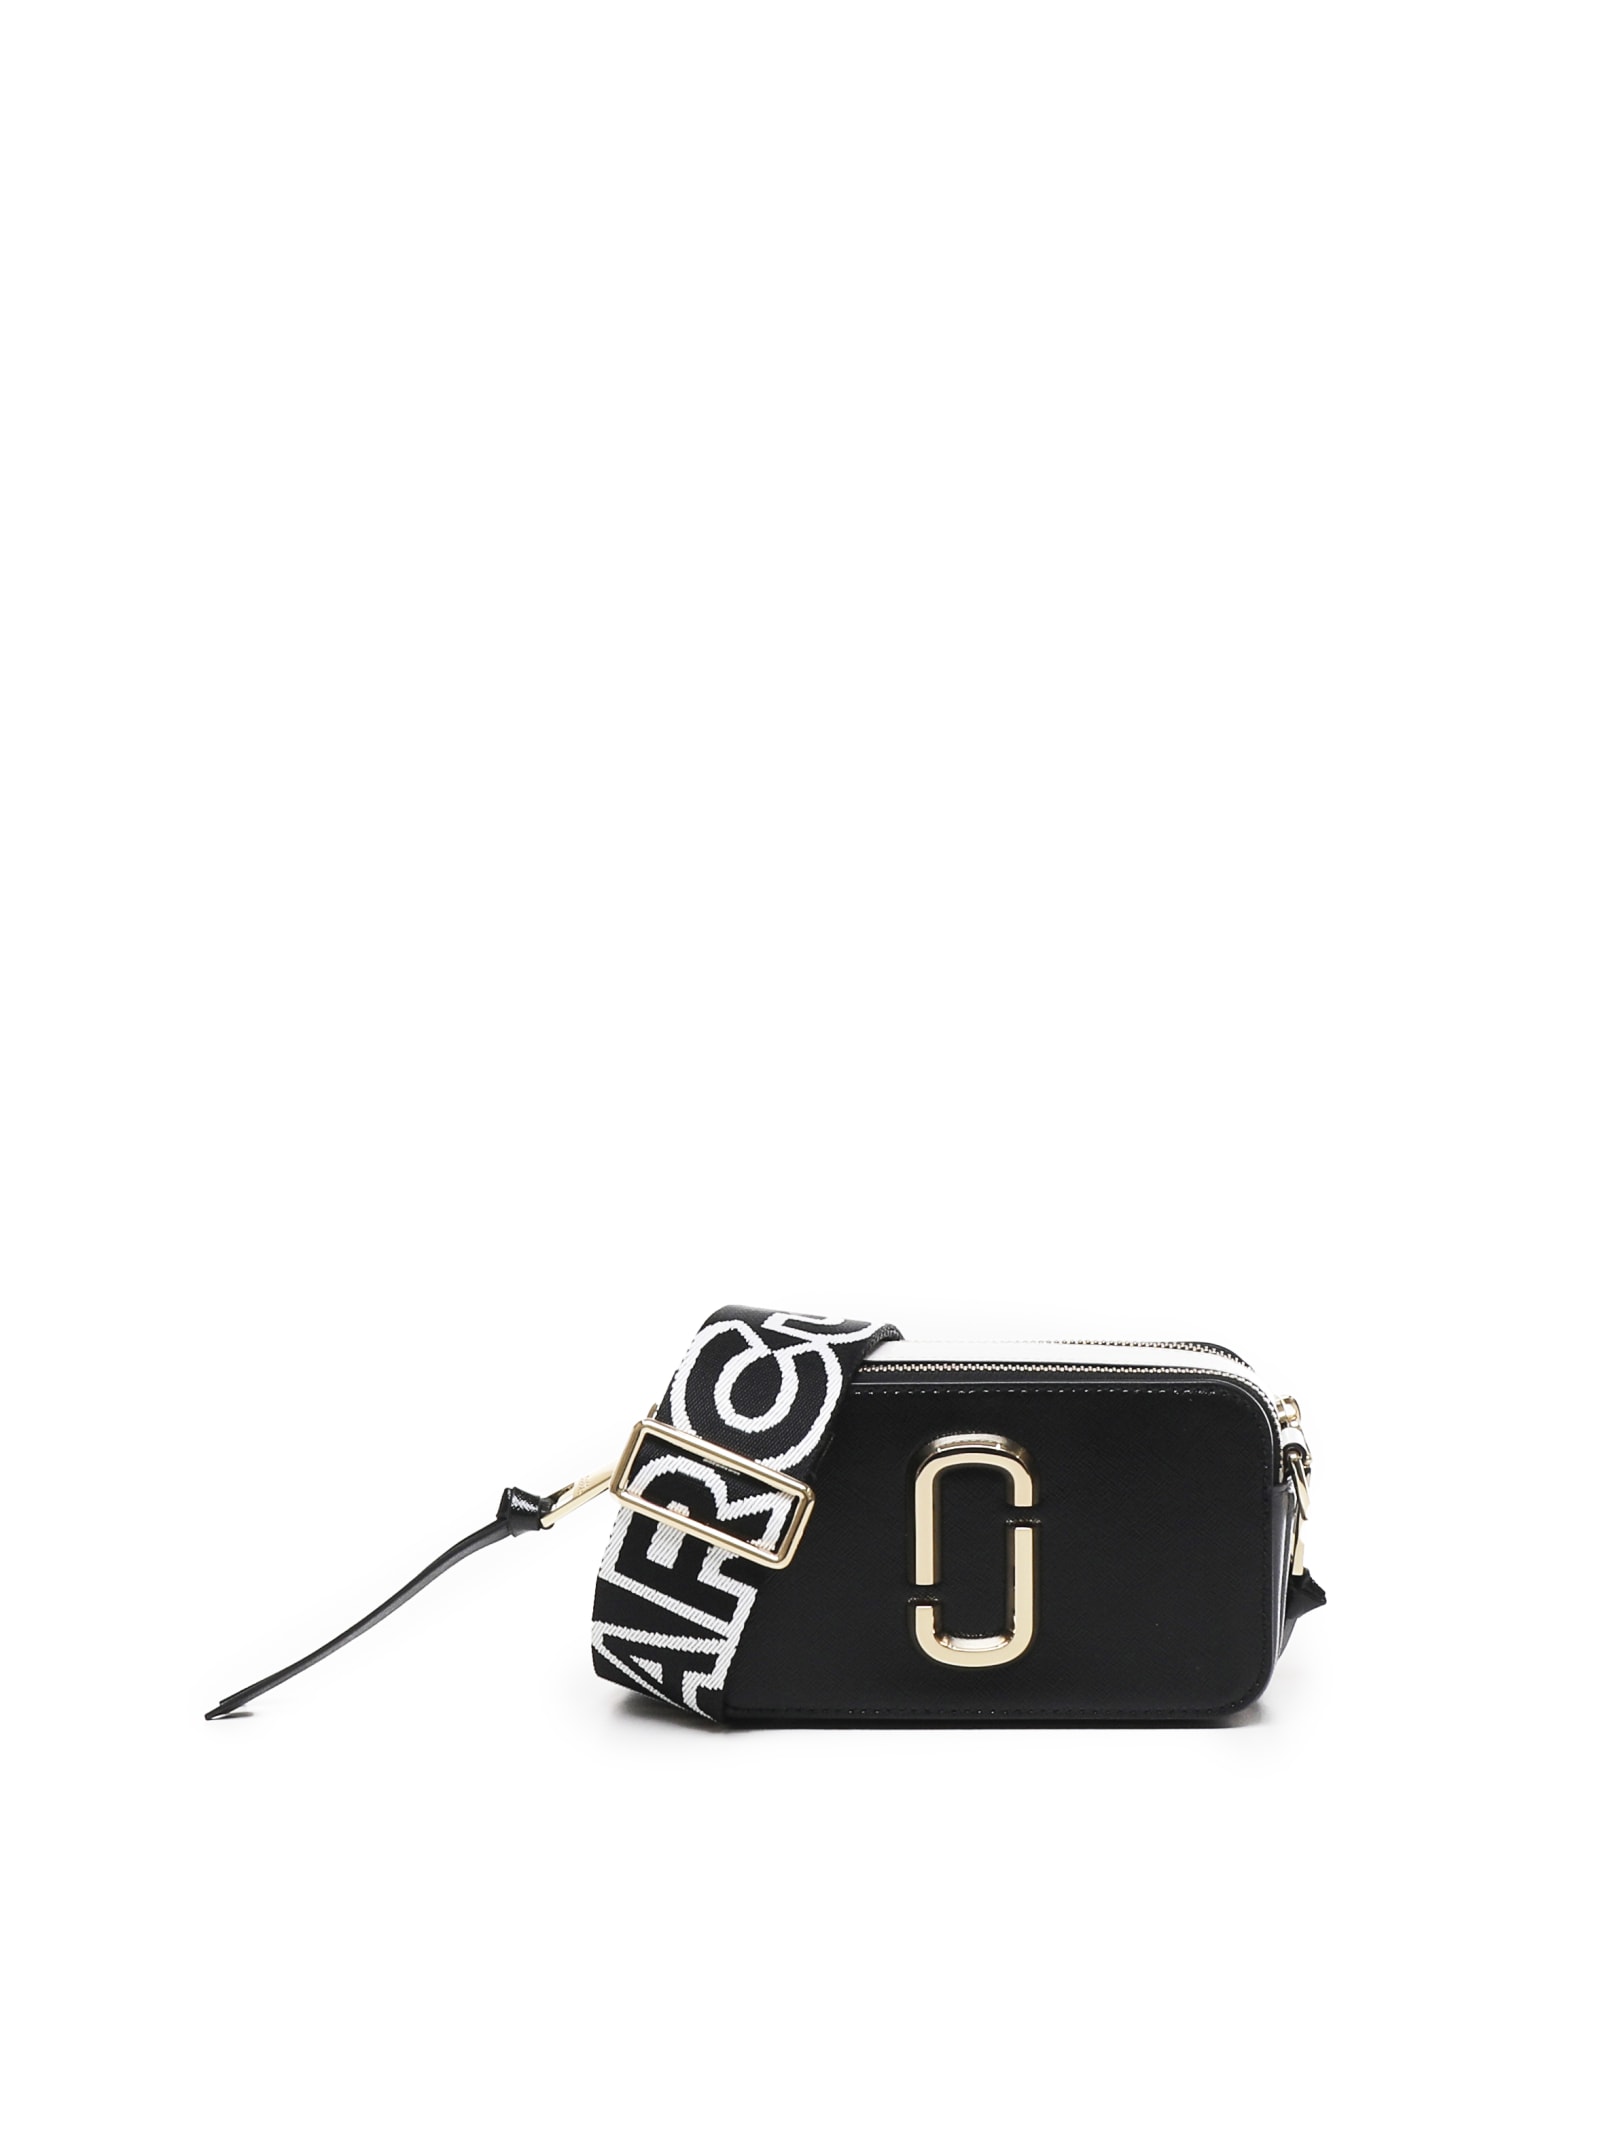 Marc Jacobs Shoulder Bag The Snapshot In Black, White